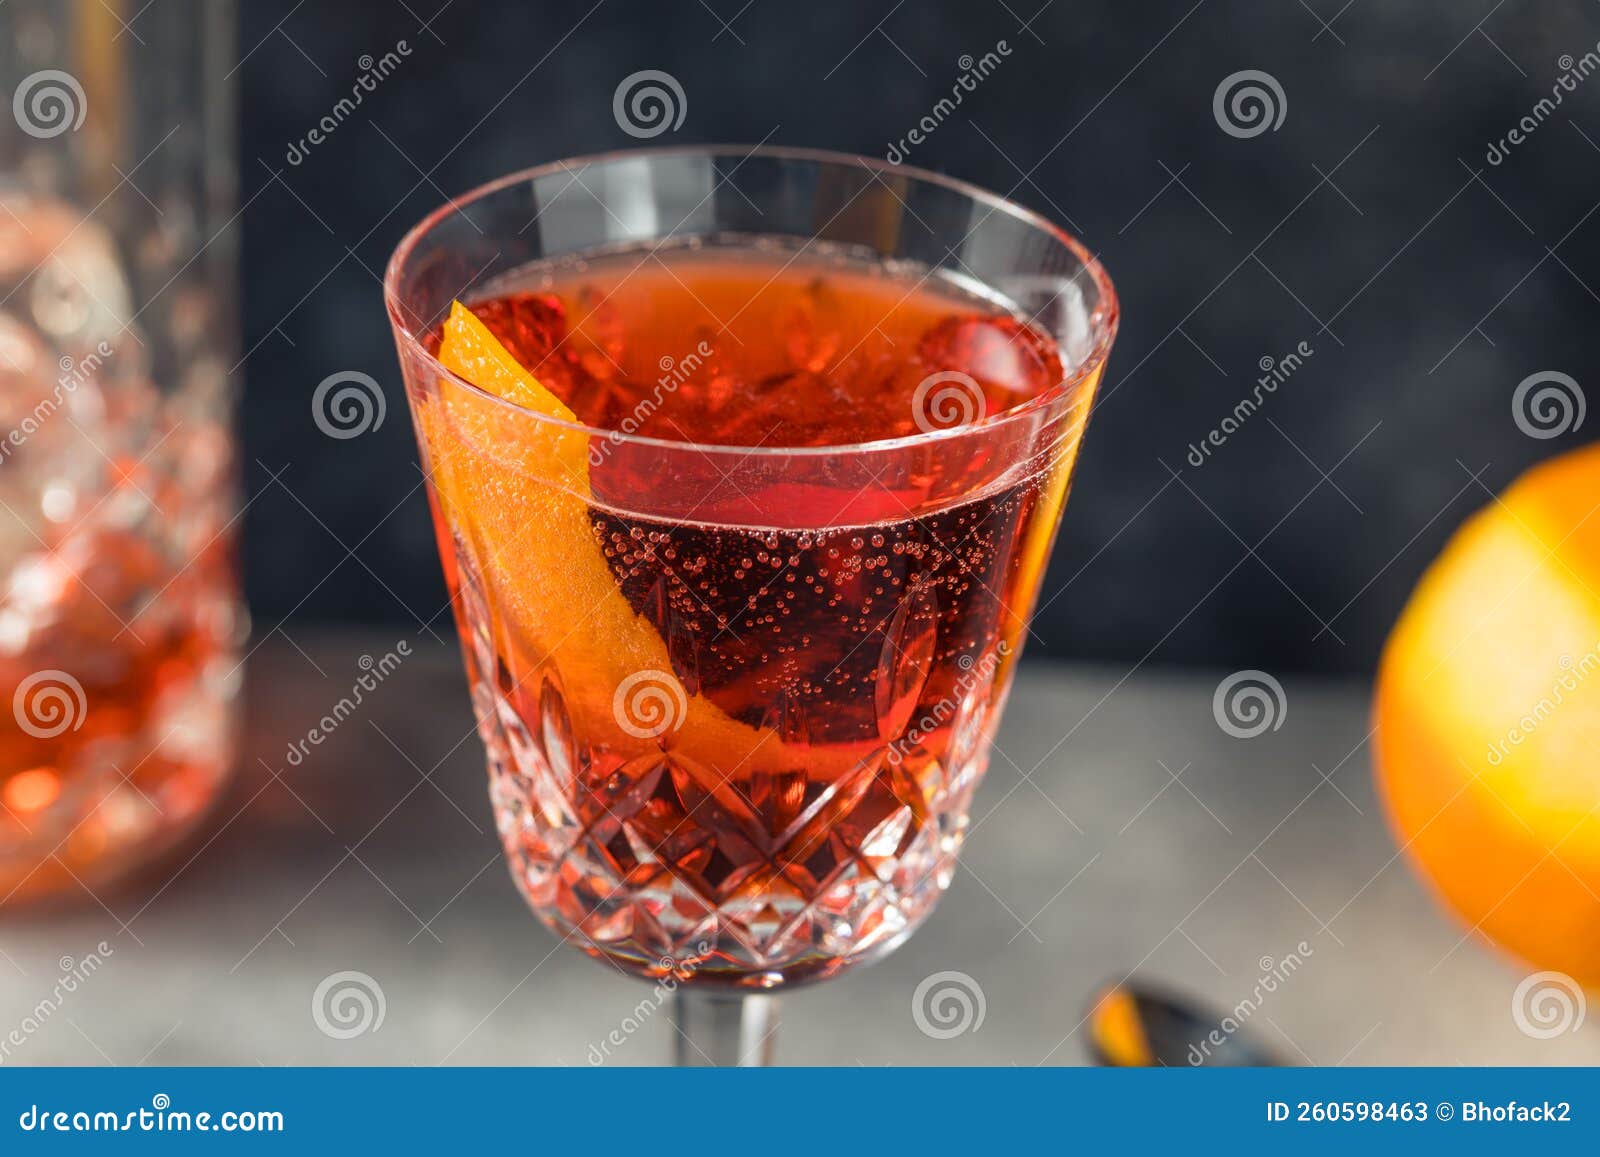 boozy refreshing negroni sbagliato cocktail